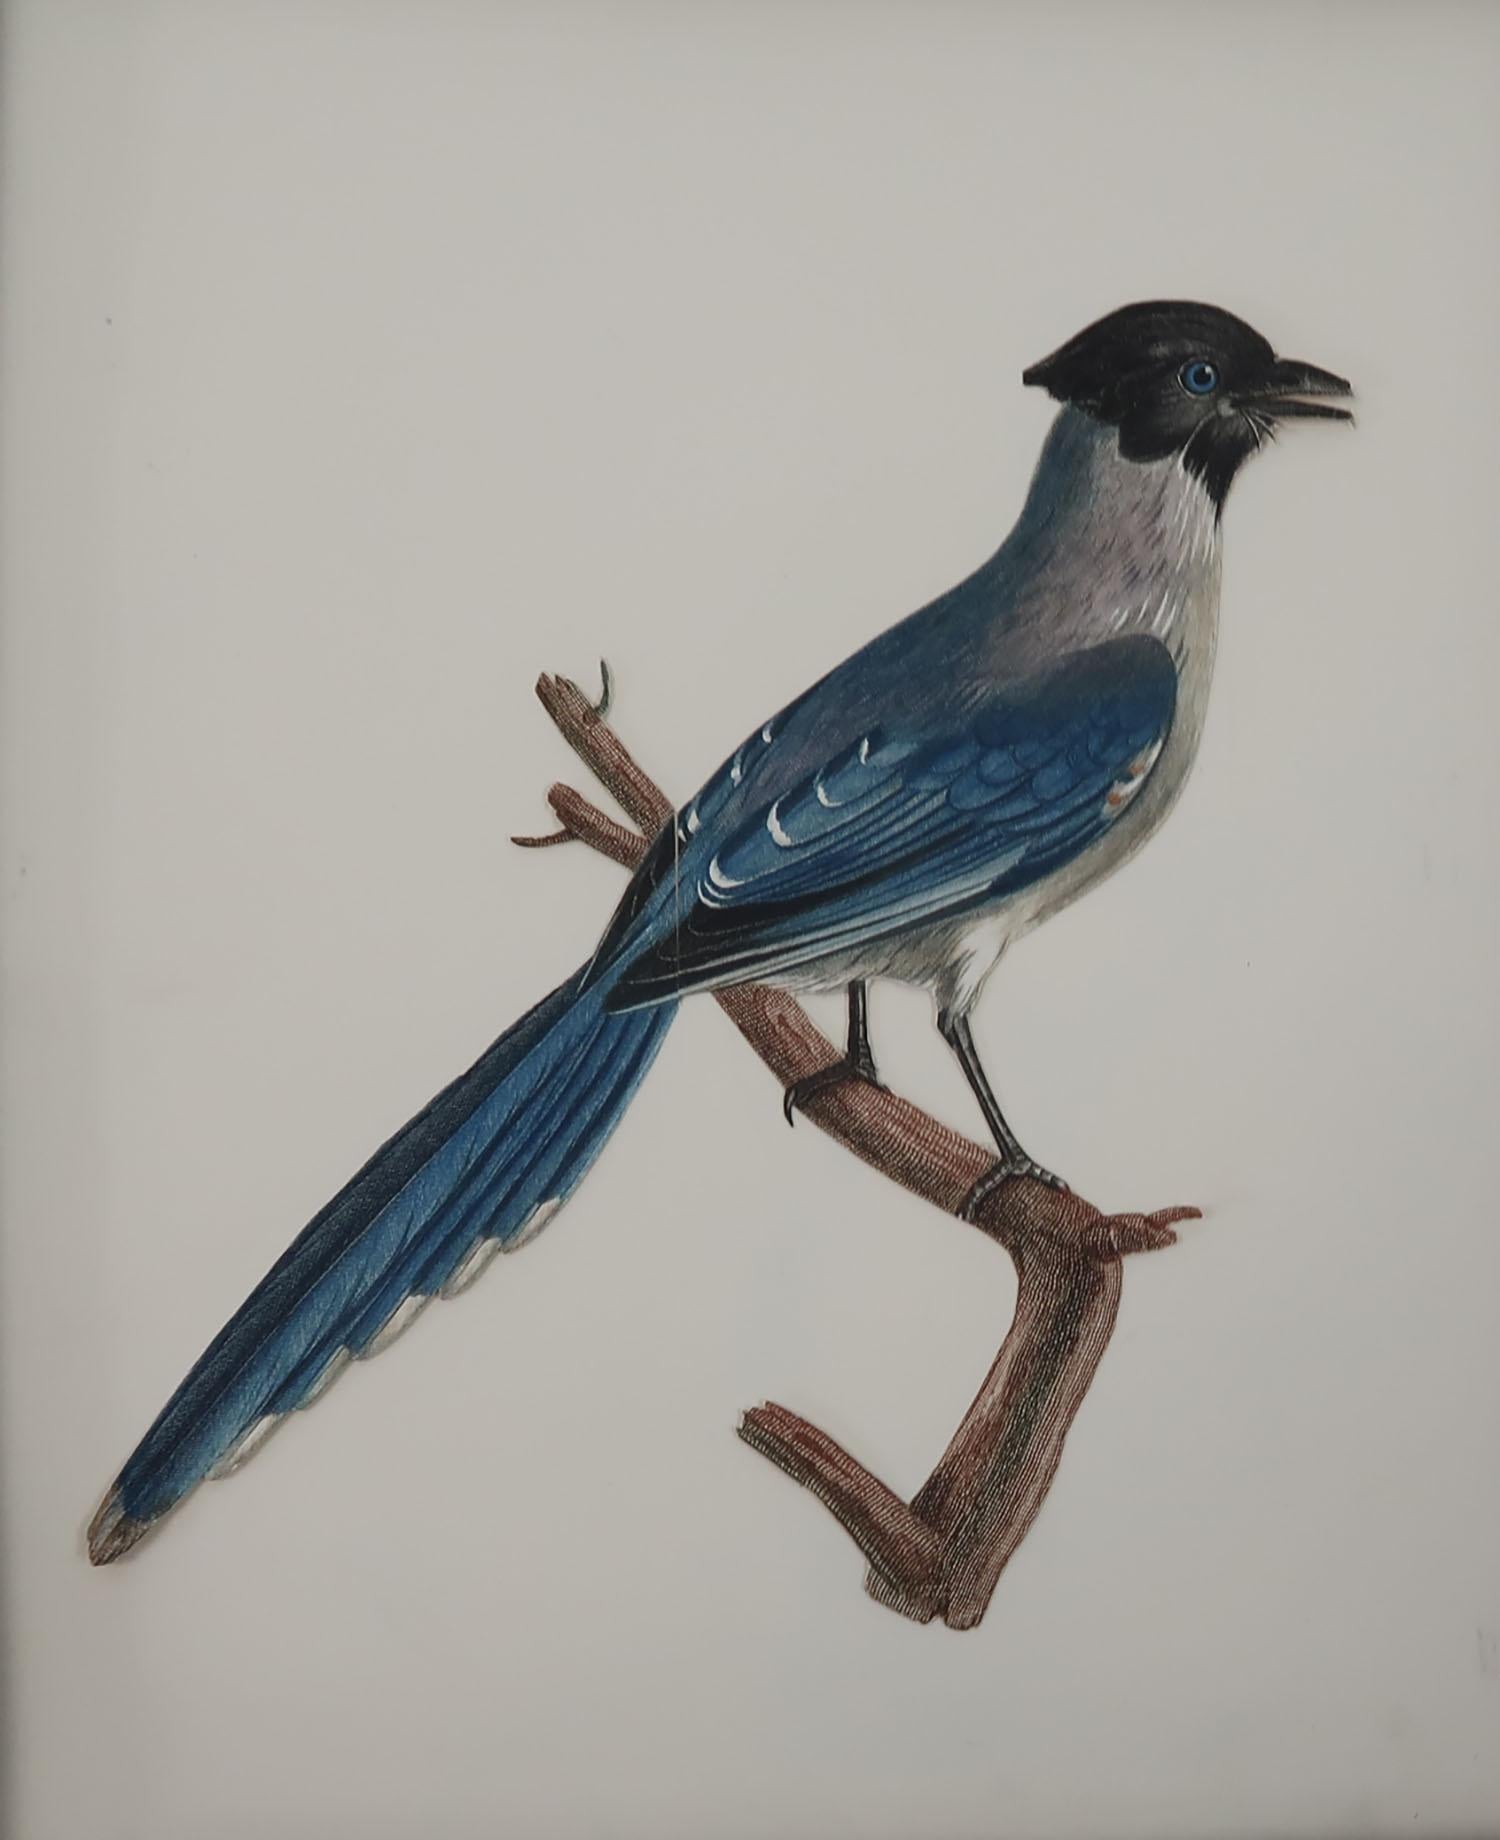 Folk Art Original Antique Decoupage Print of a Bird, circa 1850